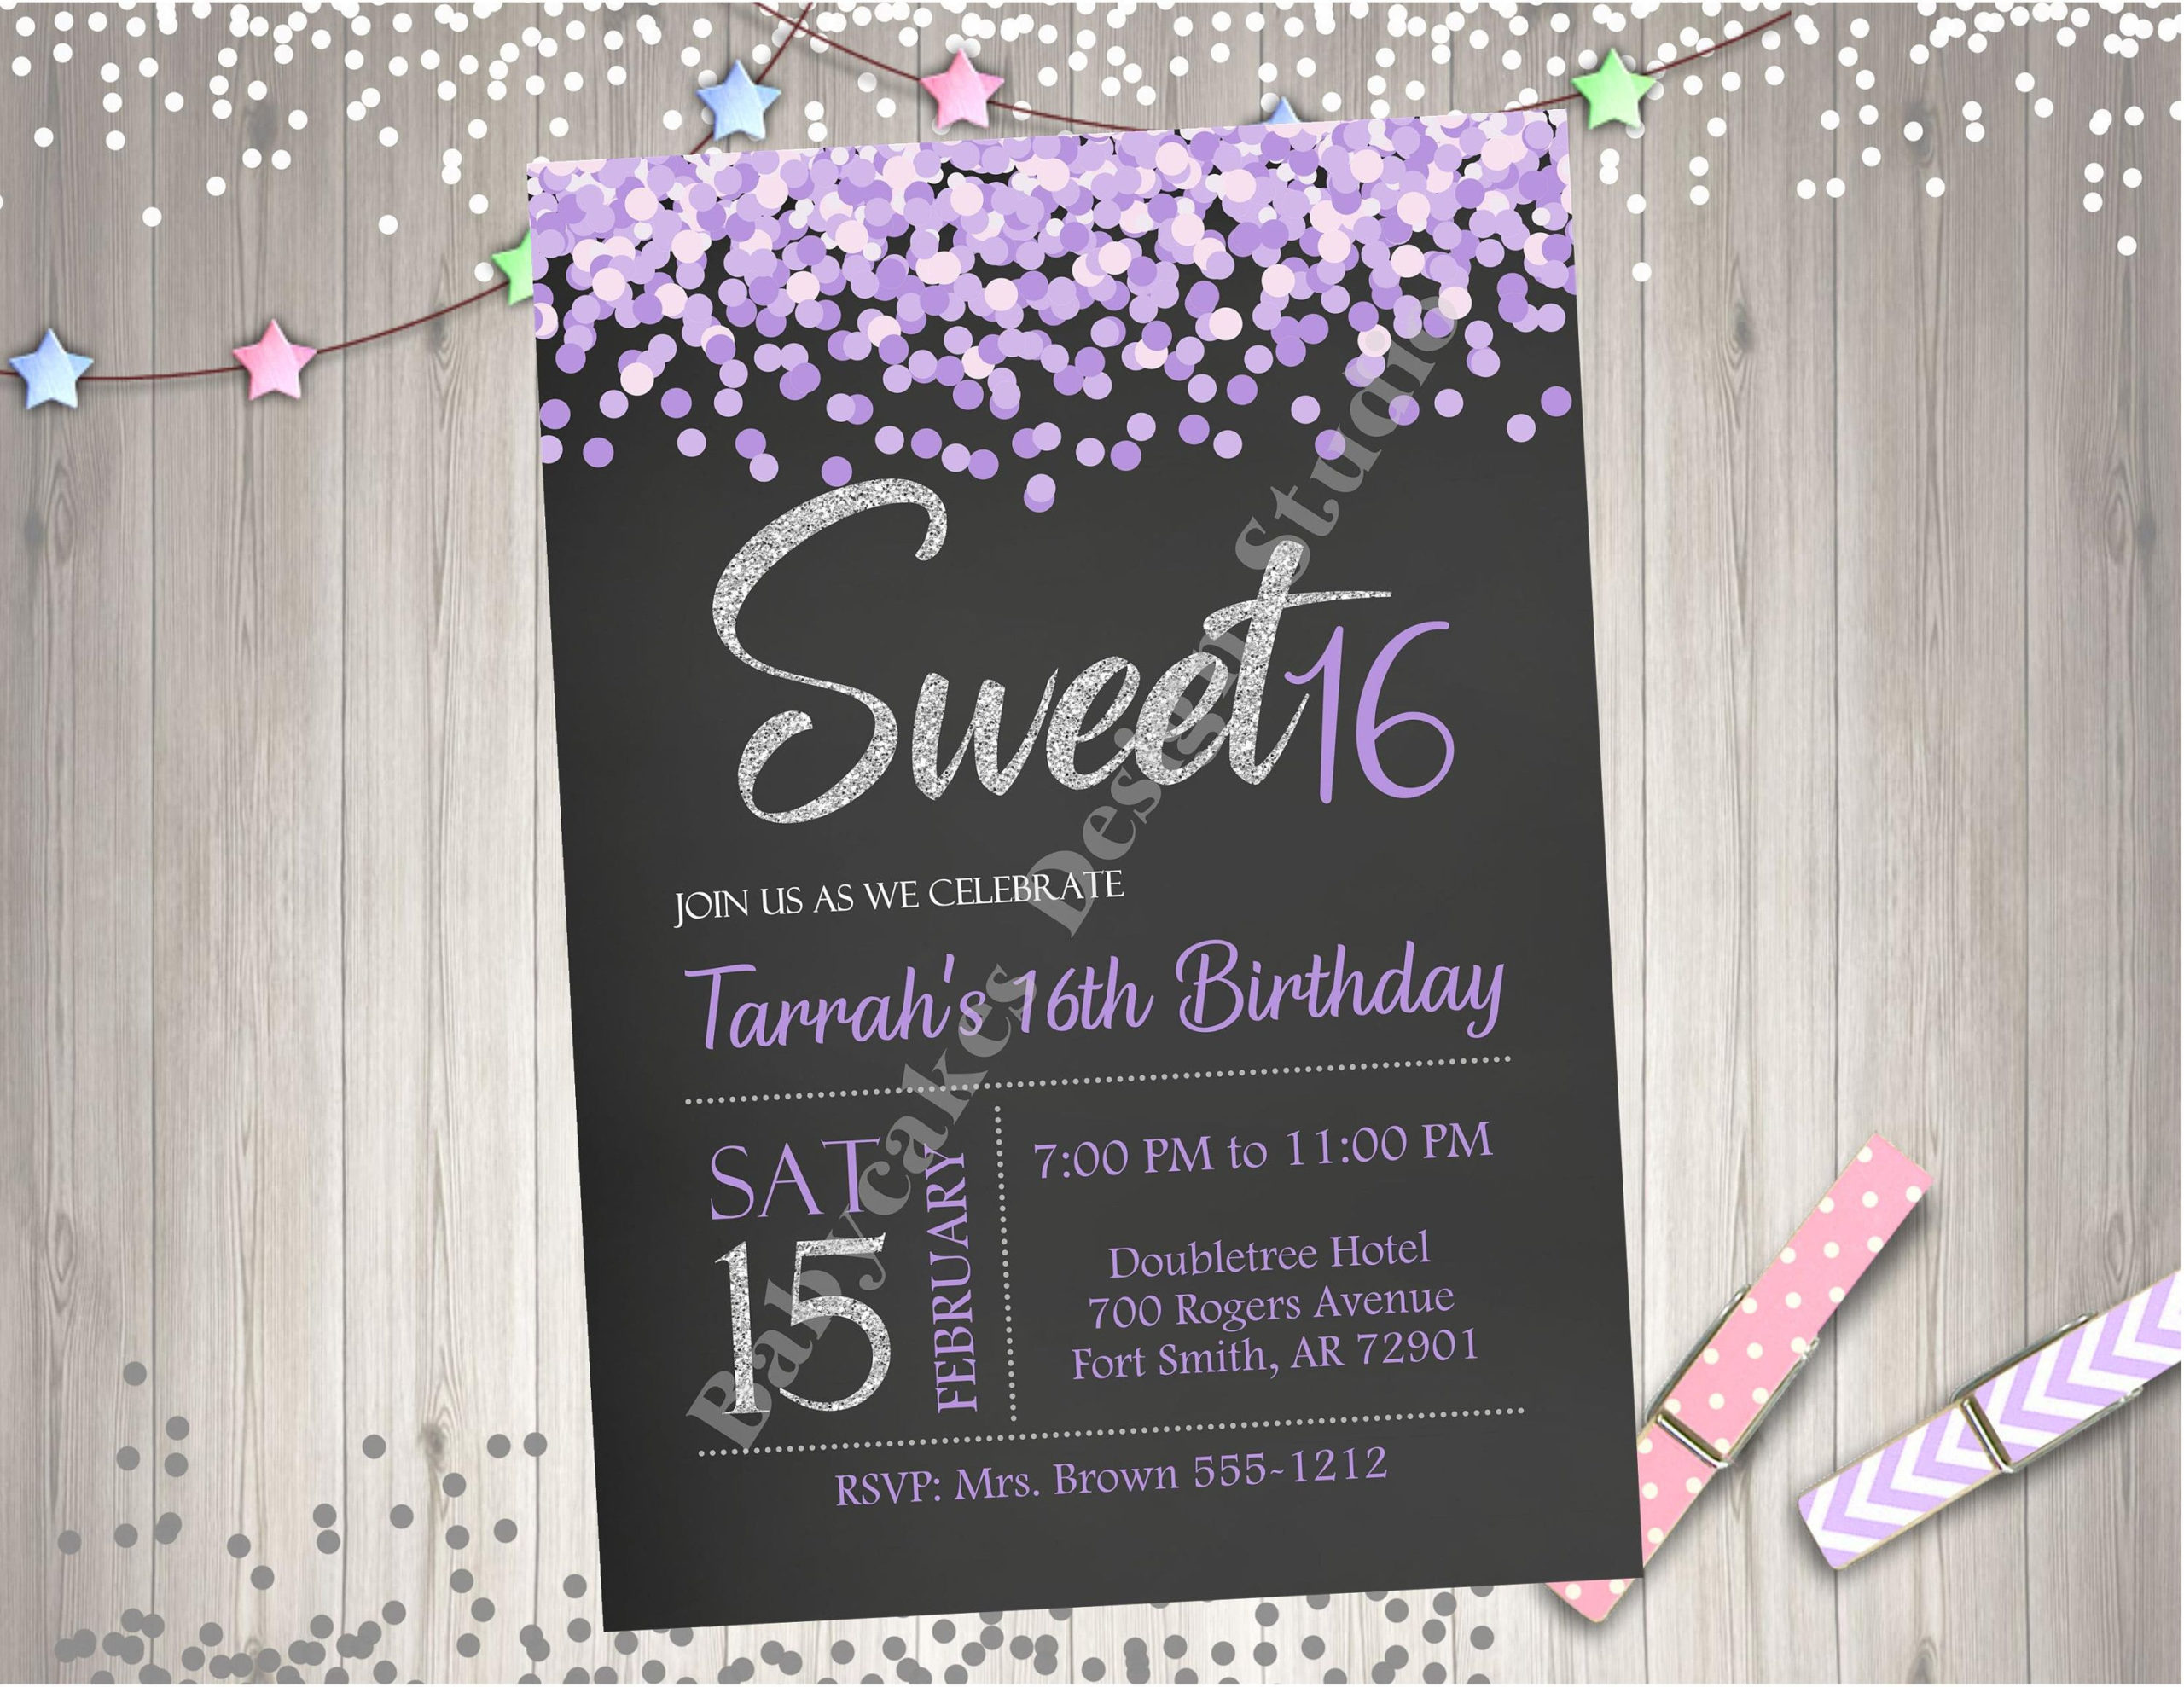 printable-birthday-invitations-sweet-16-birthday-invitations-free